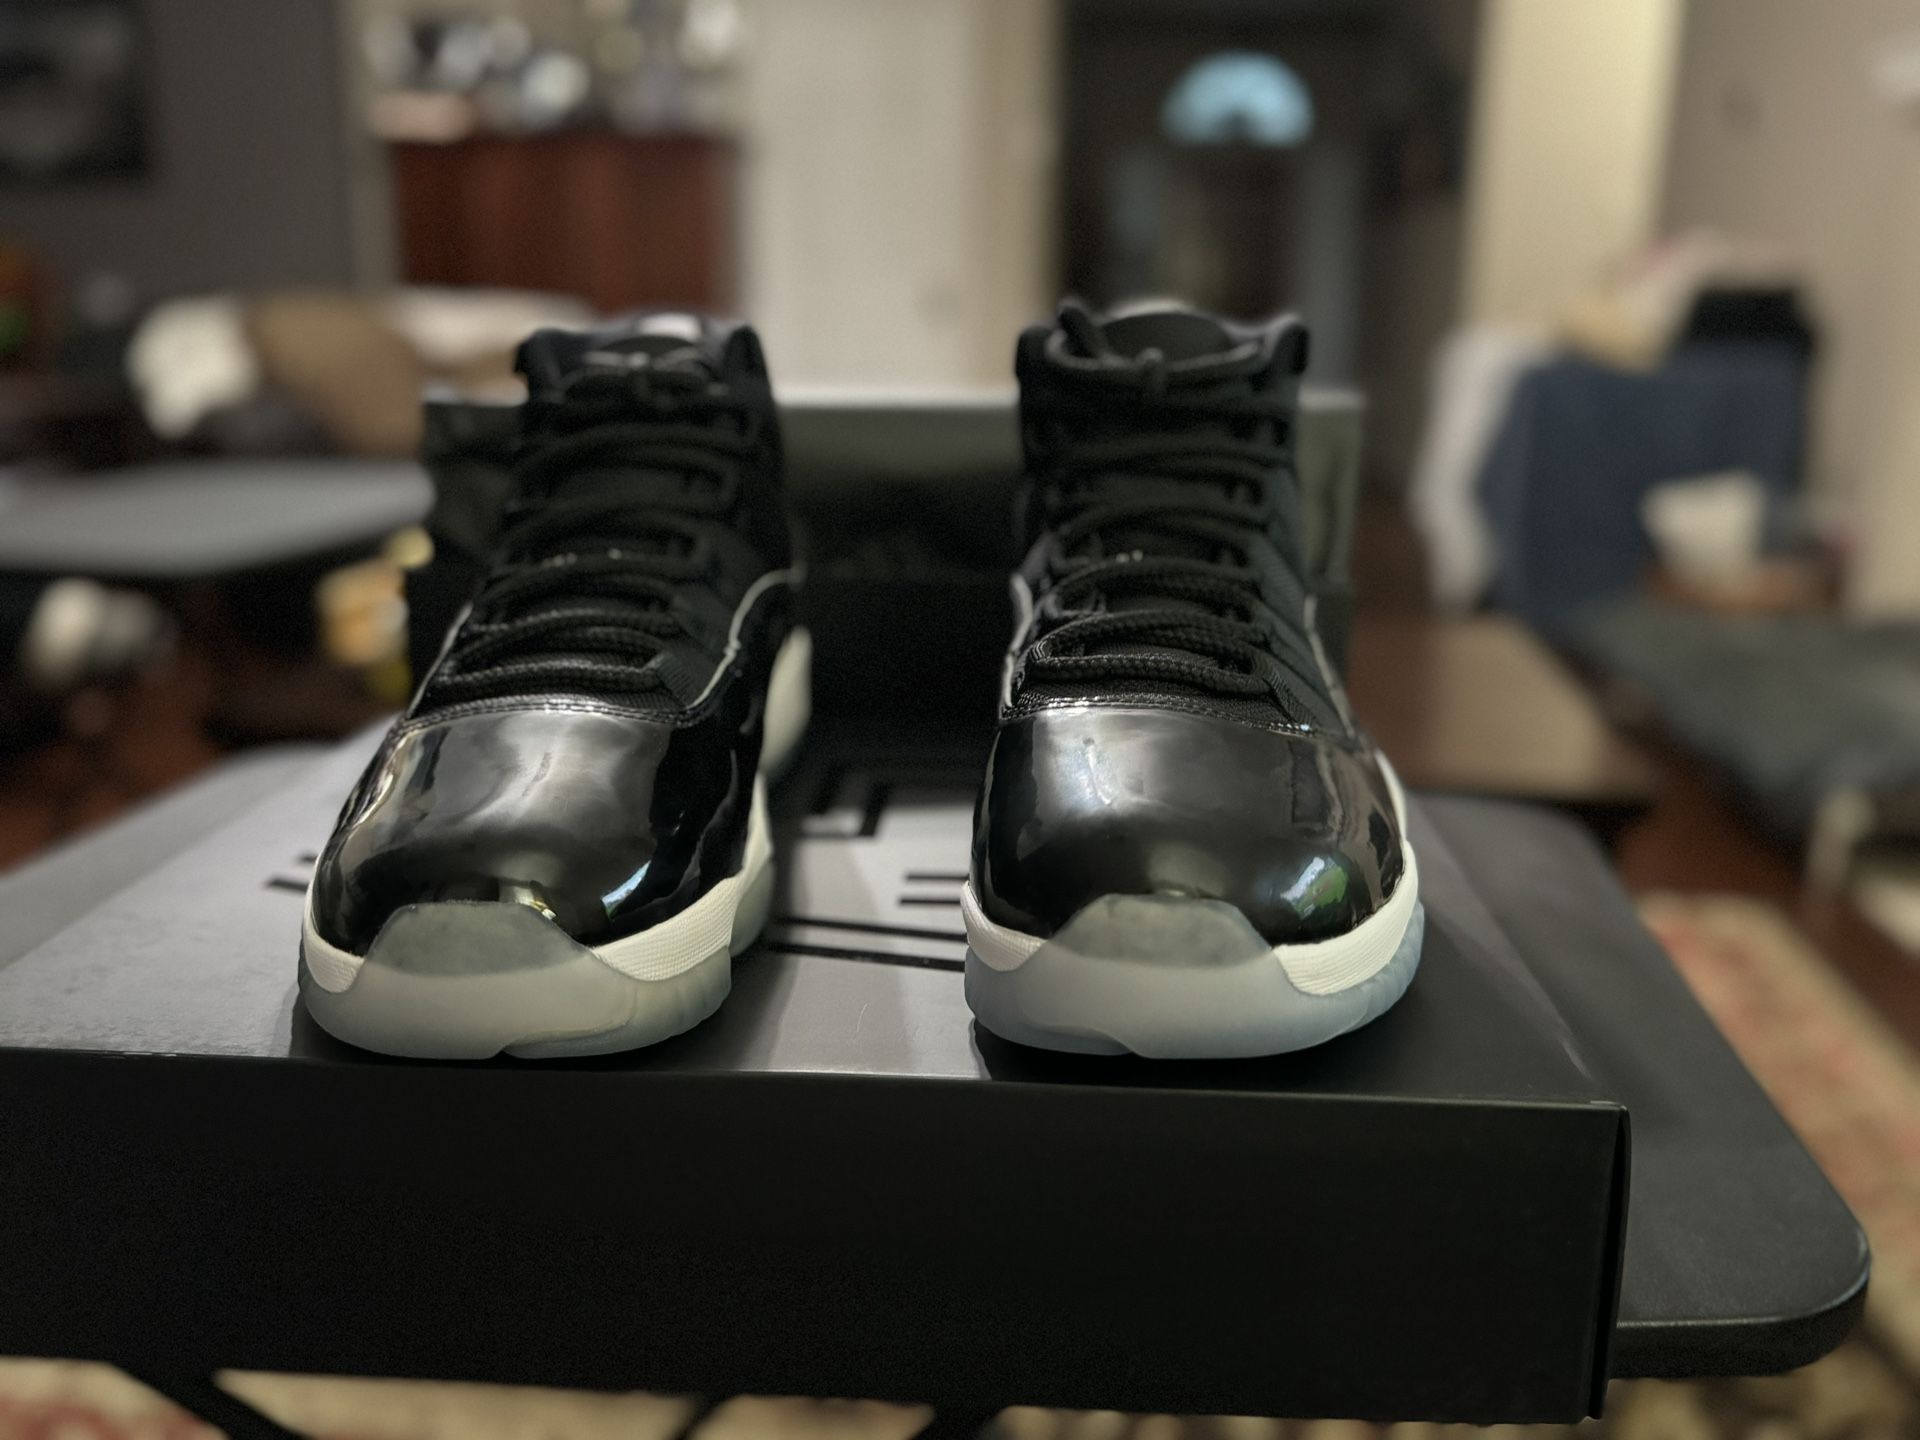  Nike Air Jordan 11 XI Retro Space Jam 2016 Men’s Size 9.5 Black Concord White  